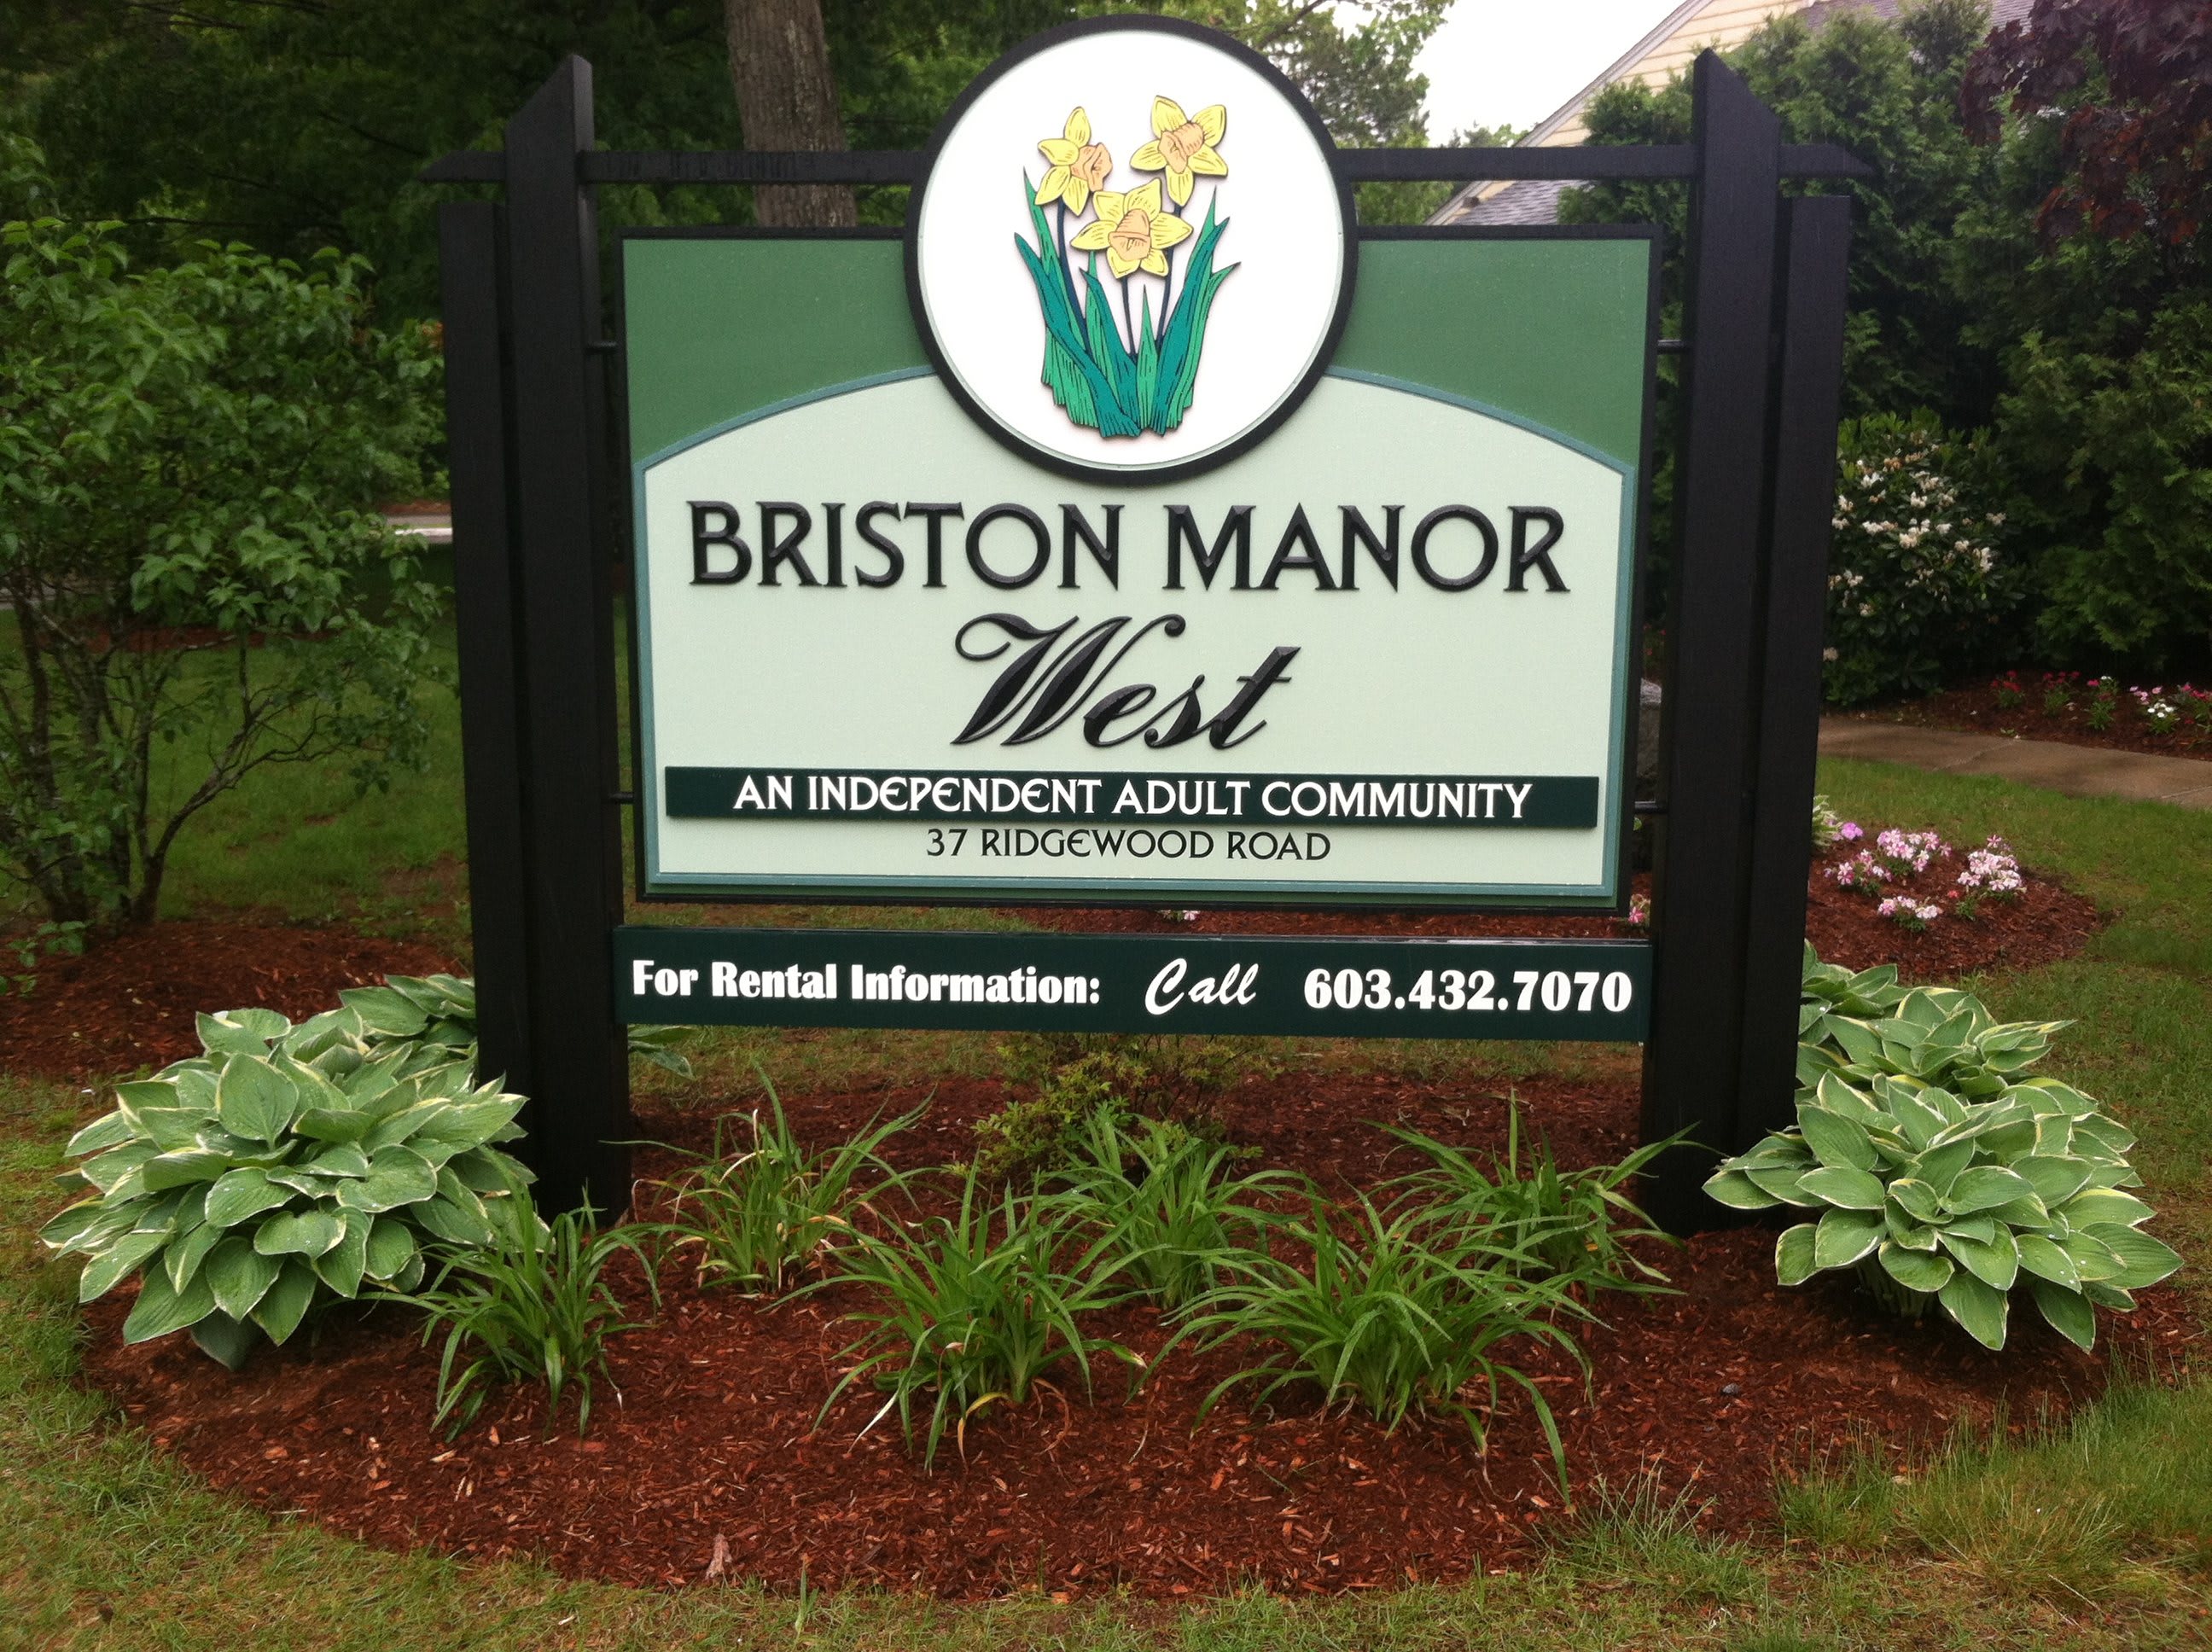 Photo of Briston Manor West